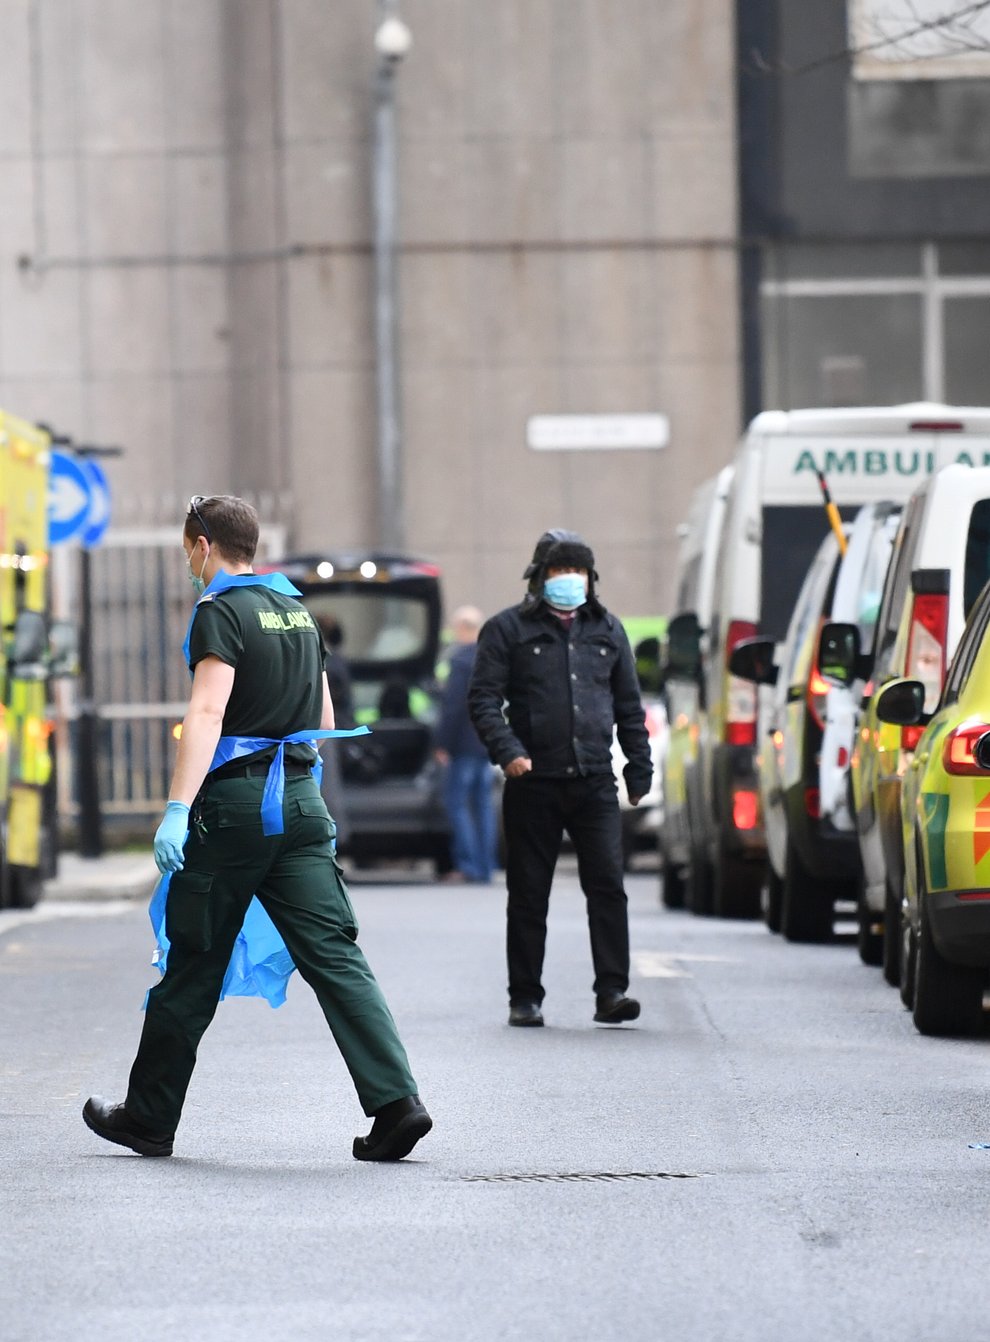 Ambulances at Whitechapel Hospital in London (Stefan Rousseau/PA)